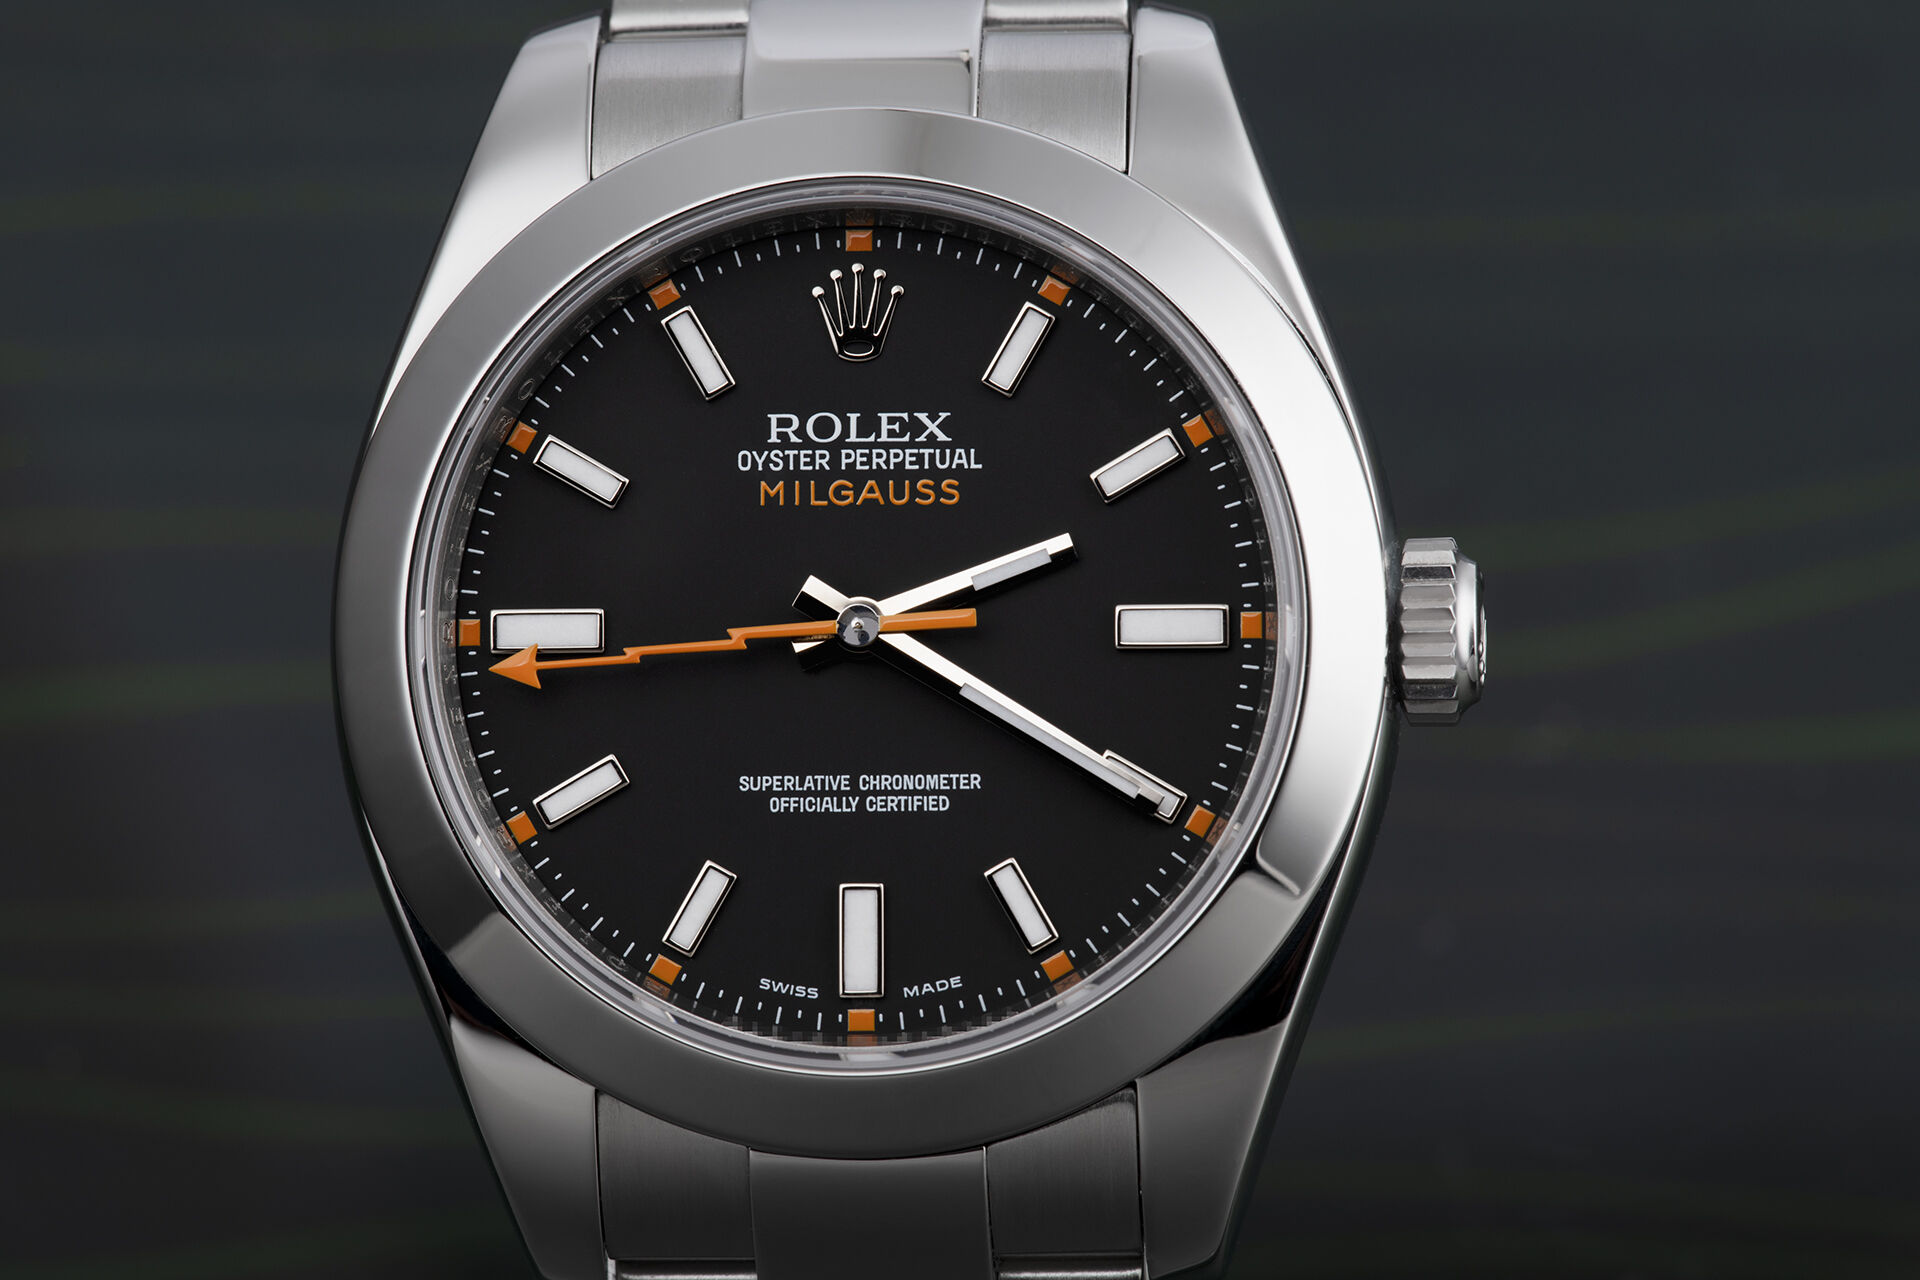 ref 116400 | Box & Certificate | Rolex Milgauss